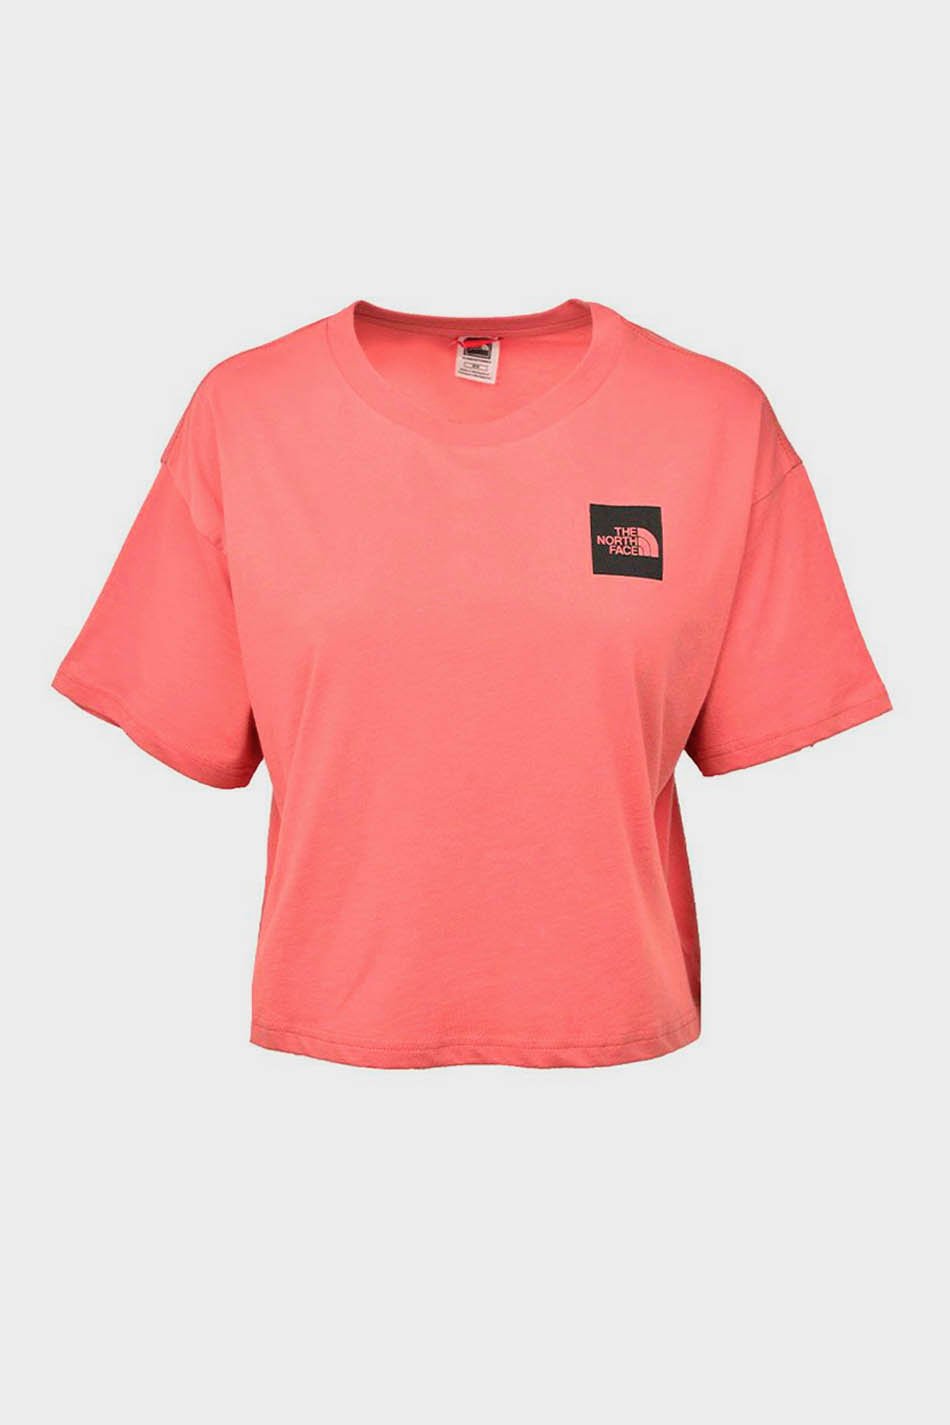 T-Shirt The North Face korallenfarbig